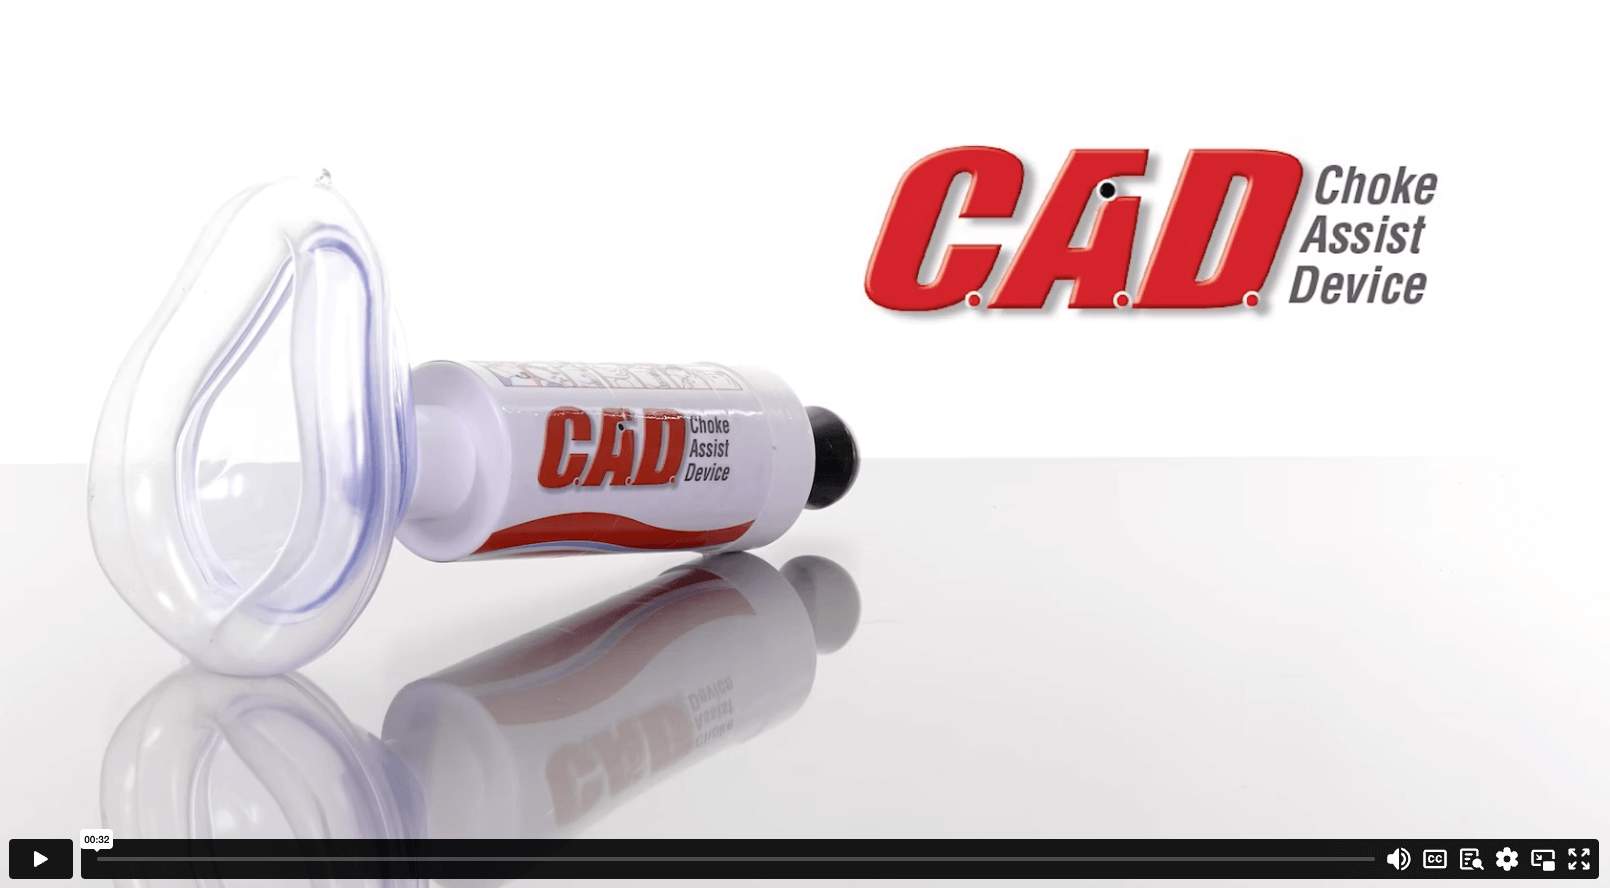 Load video: CAD Choke Assist Device Video